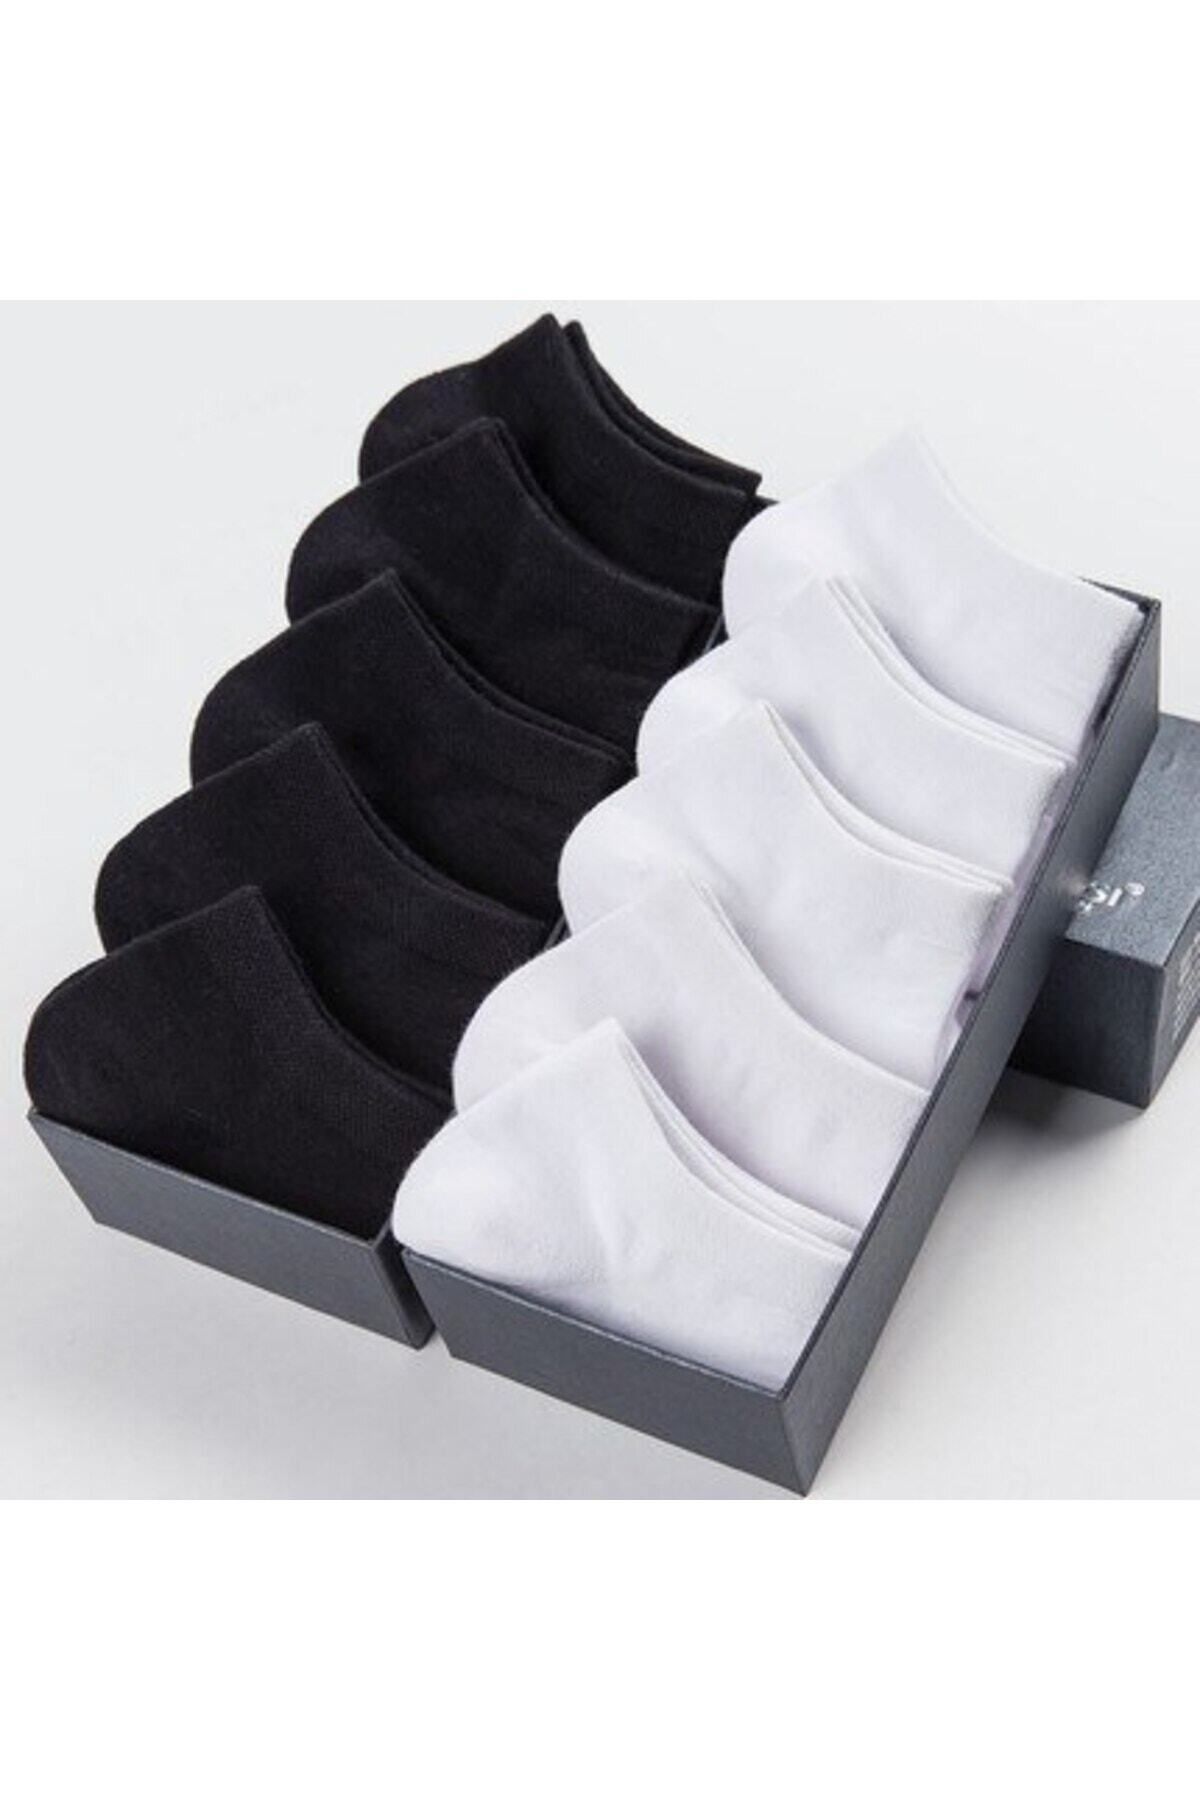 çorapmanya 10 Çift Modal Siyah-beyaz Erkek Patik Çorap Bilek Boy